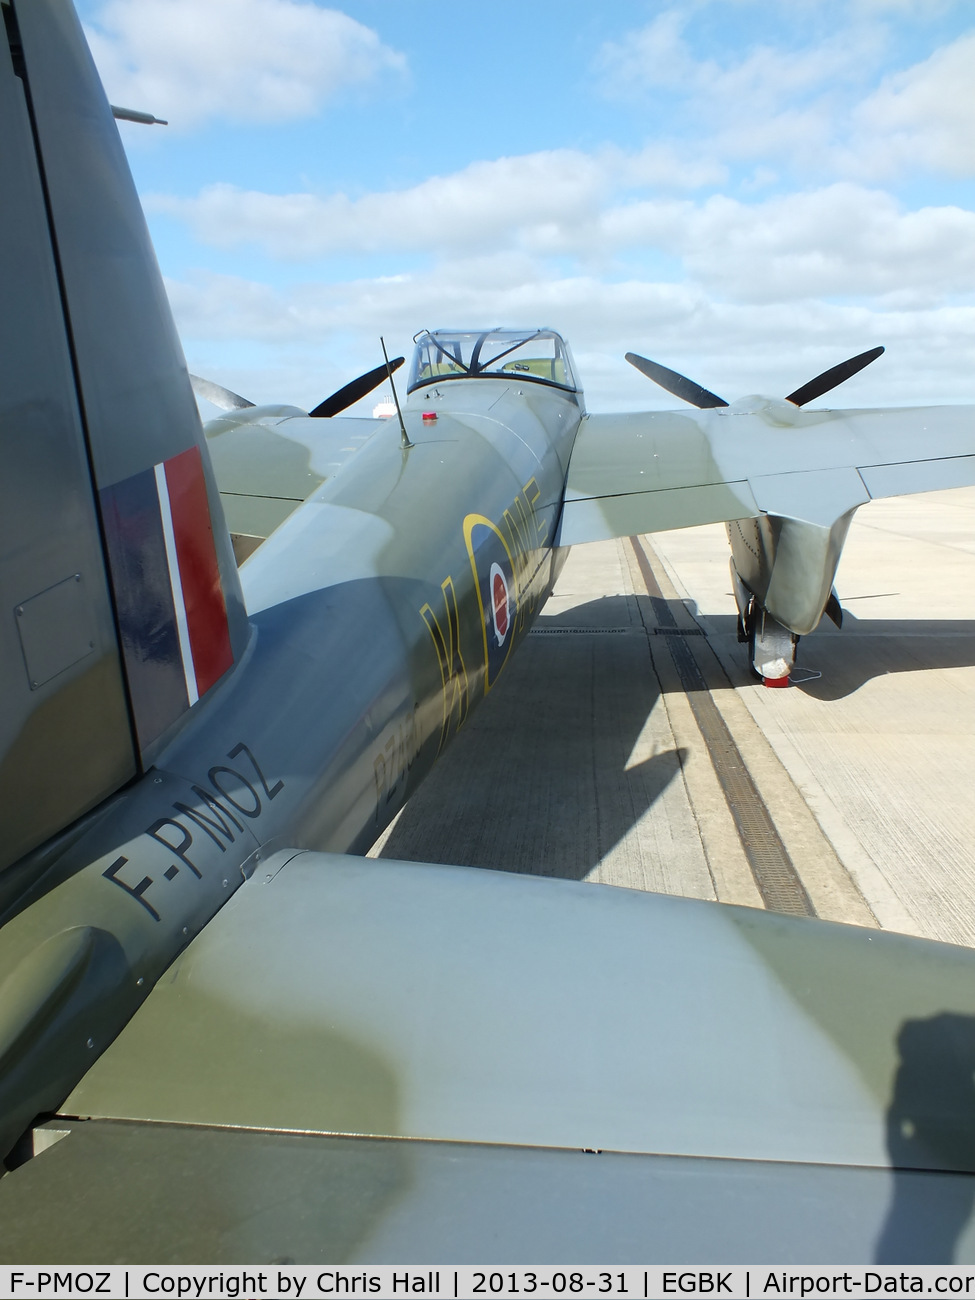 F-PMOZ, De Havilland (BBC) DH-98 Mosquito Replica C/N 1, at the LAA Rally 2013, Sywell